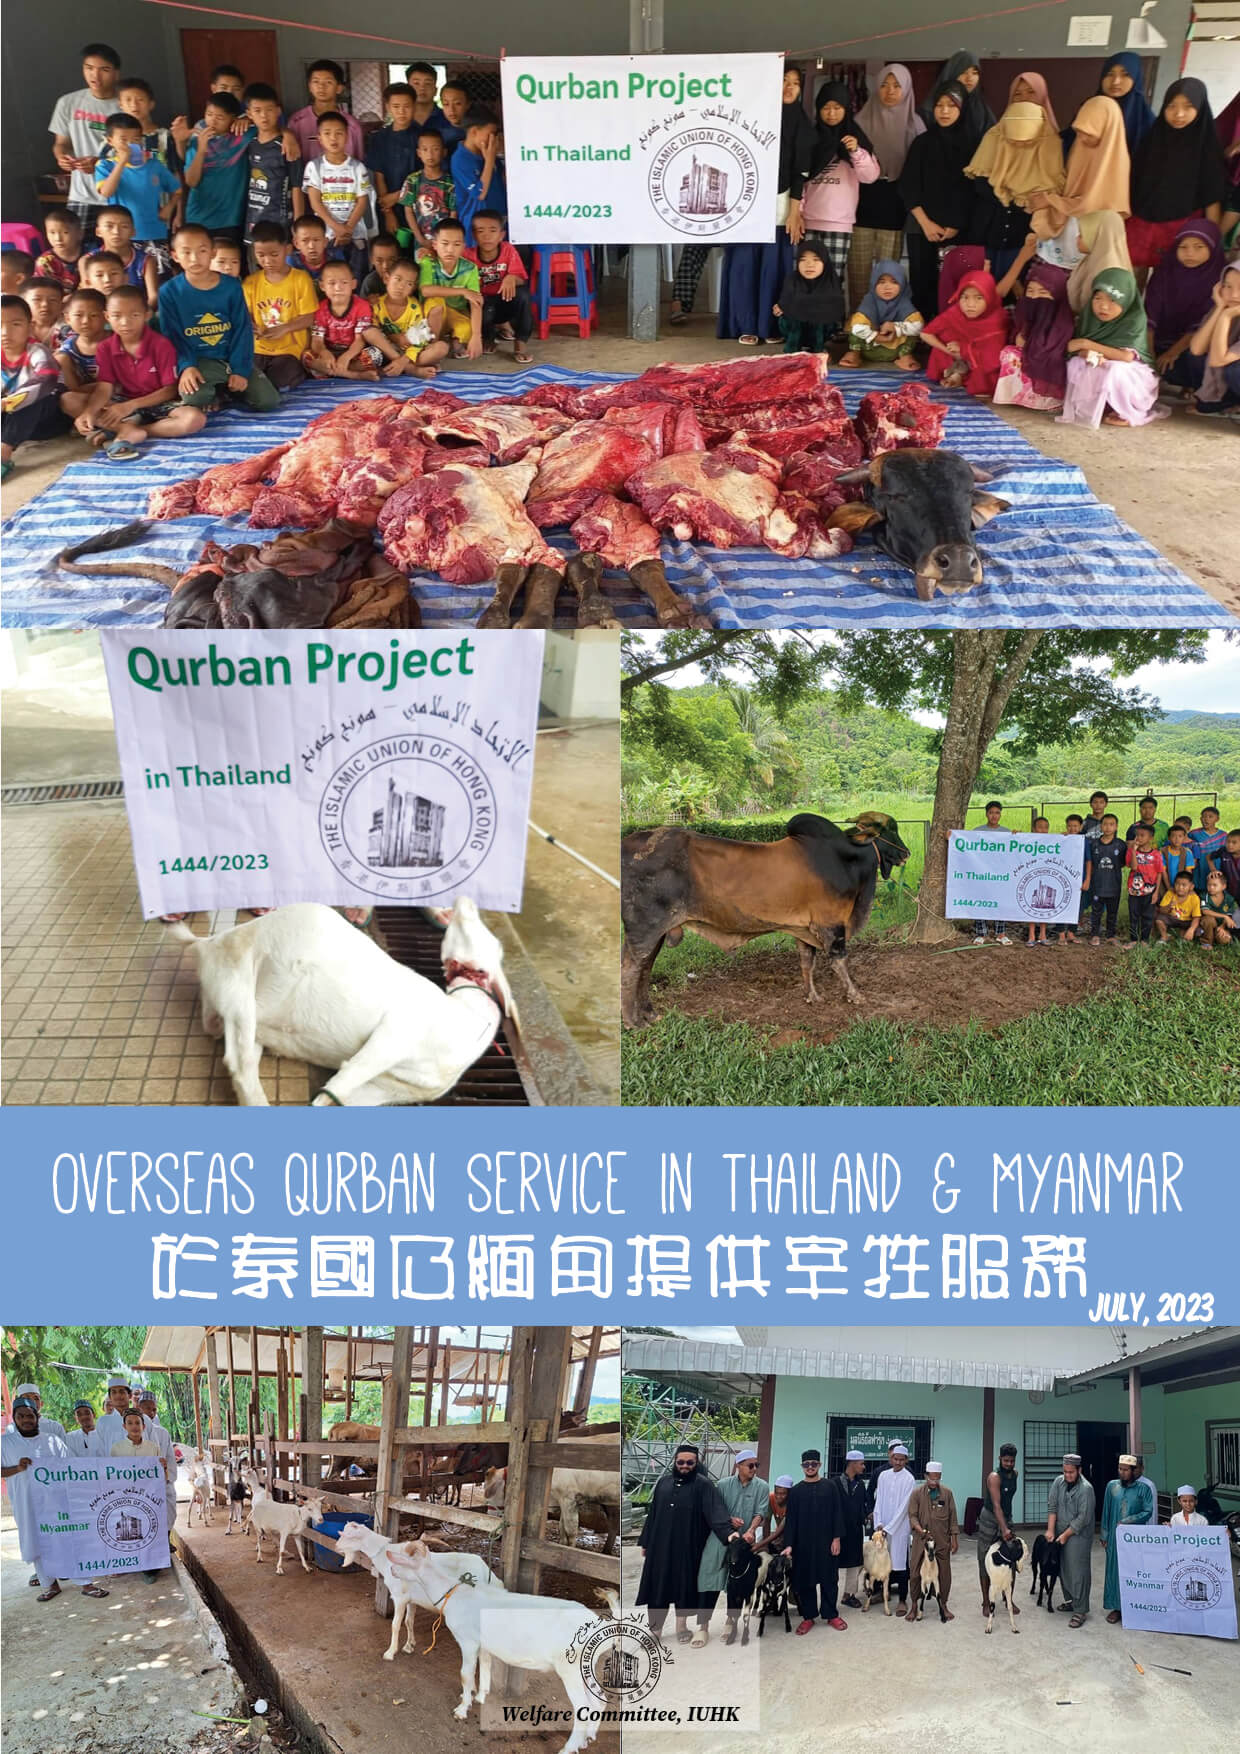 Overseas Qurban Service in Thailand & Myanmar 2023